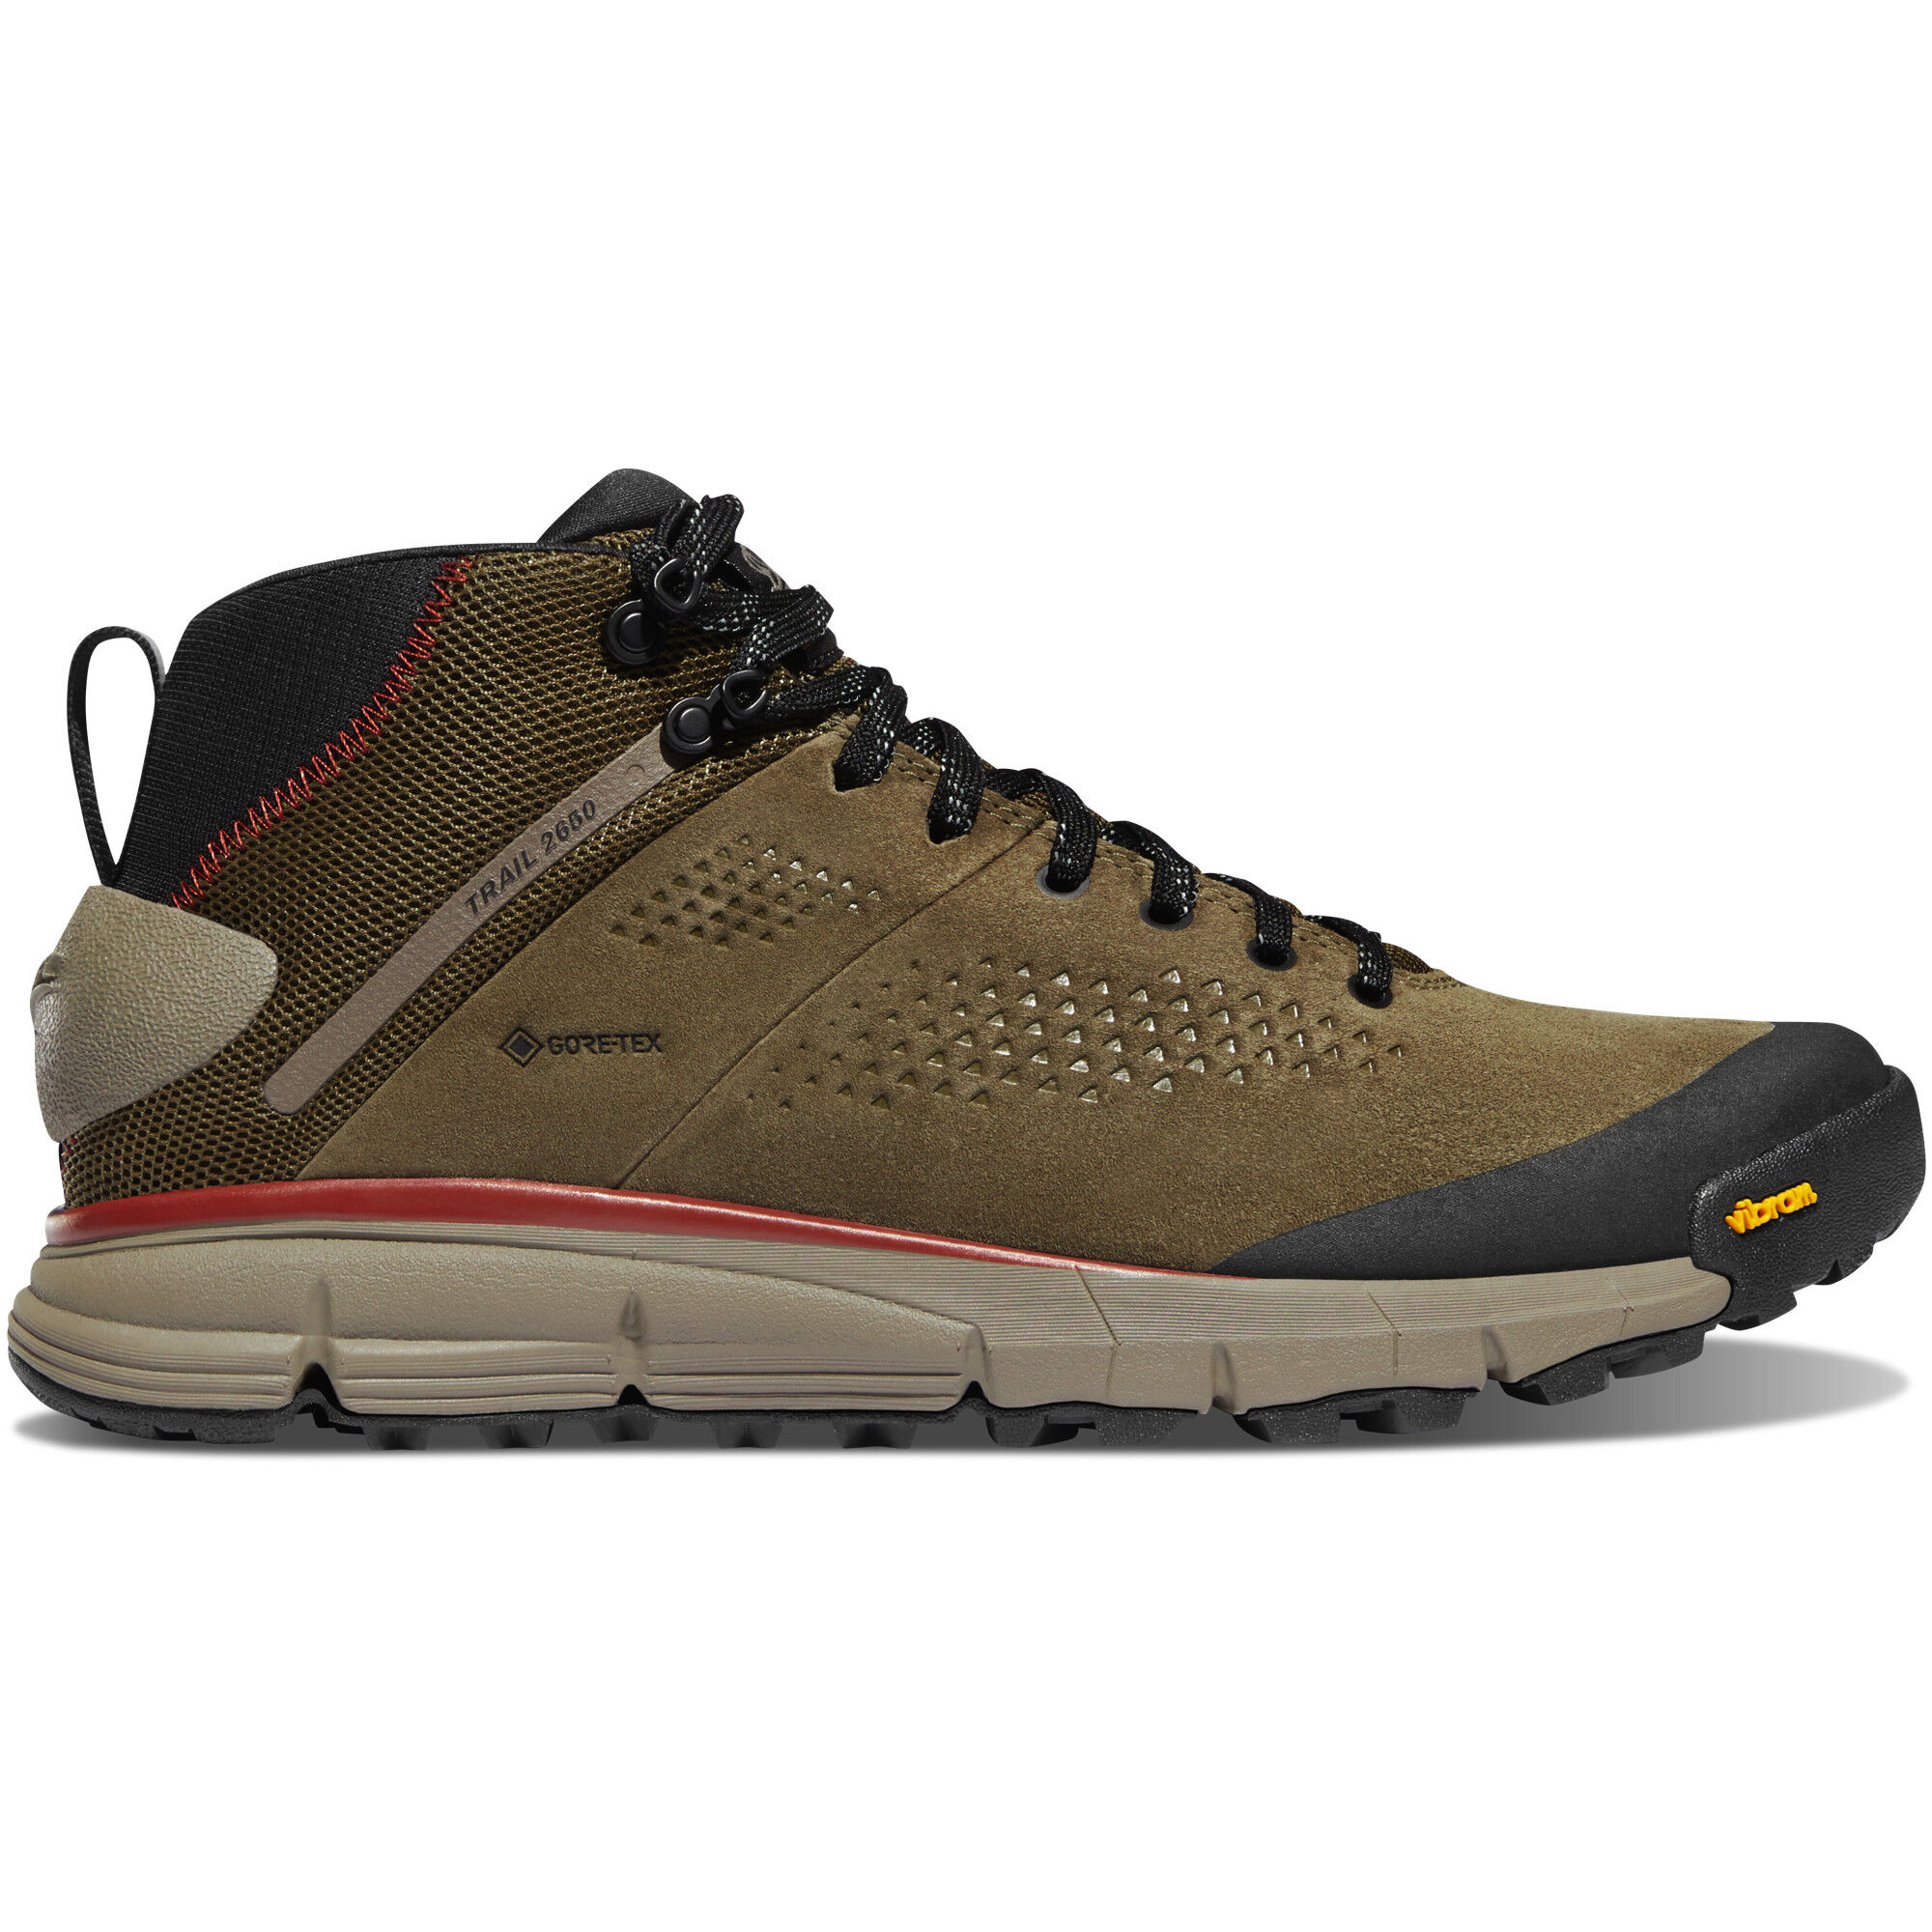 Danner Trail 2650 Mid 4 GTX - Trekking boots - Men's